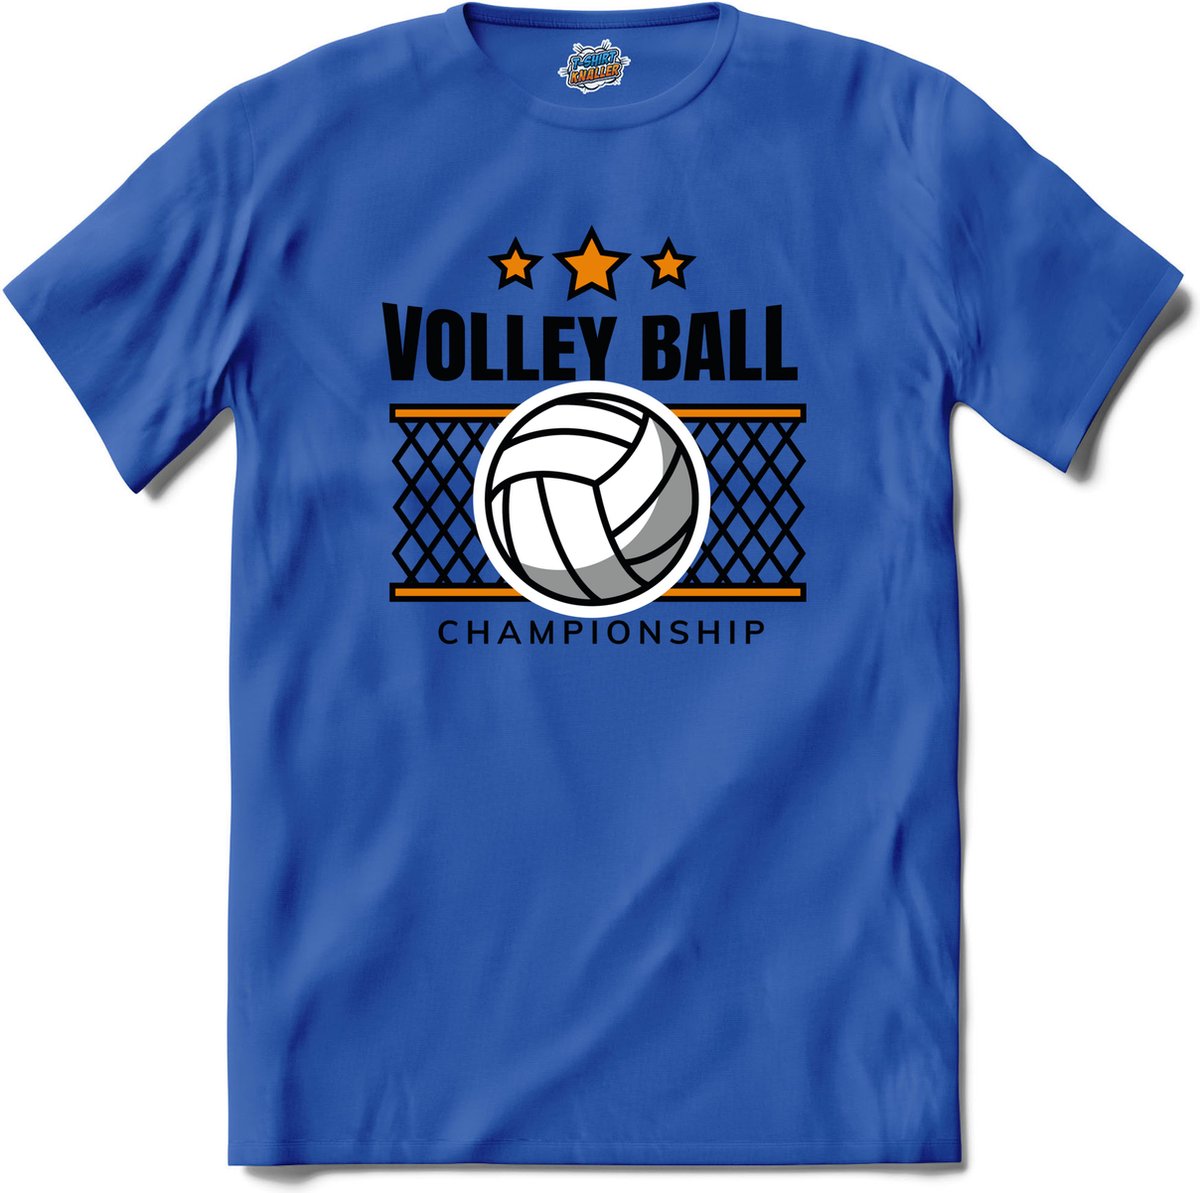 Volleybal net sport - T-Shirt - Meisjes - Royal Blue - Maat 8 jaar